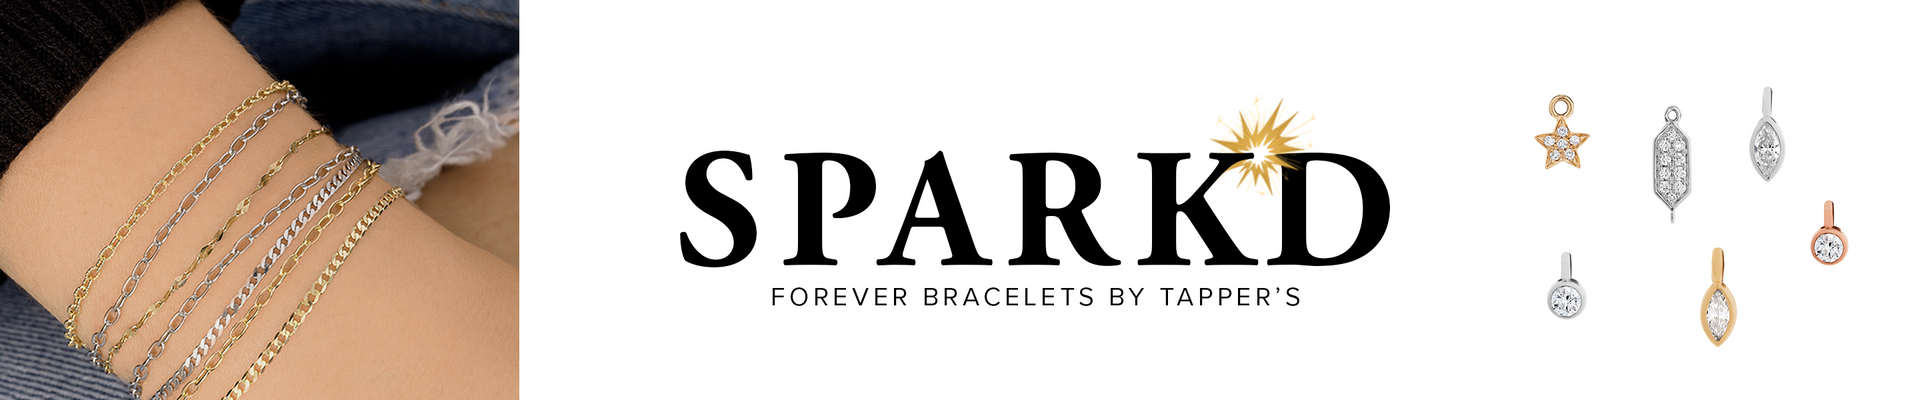 Spark'd  Permanent Bracelets by Tapper's